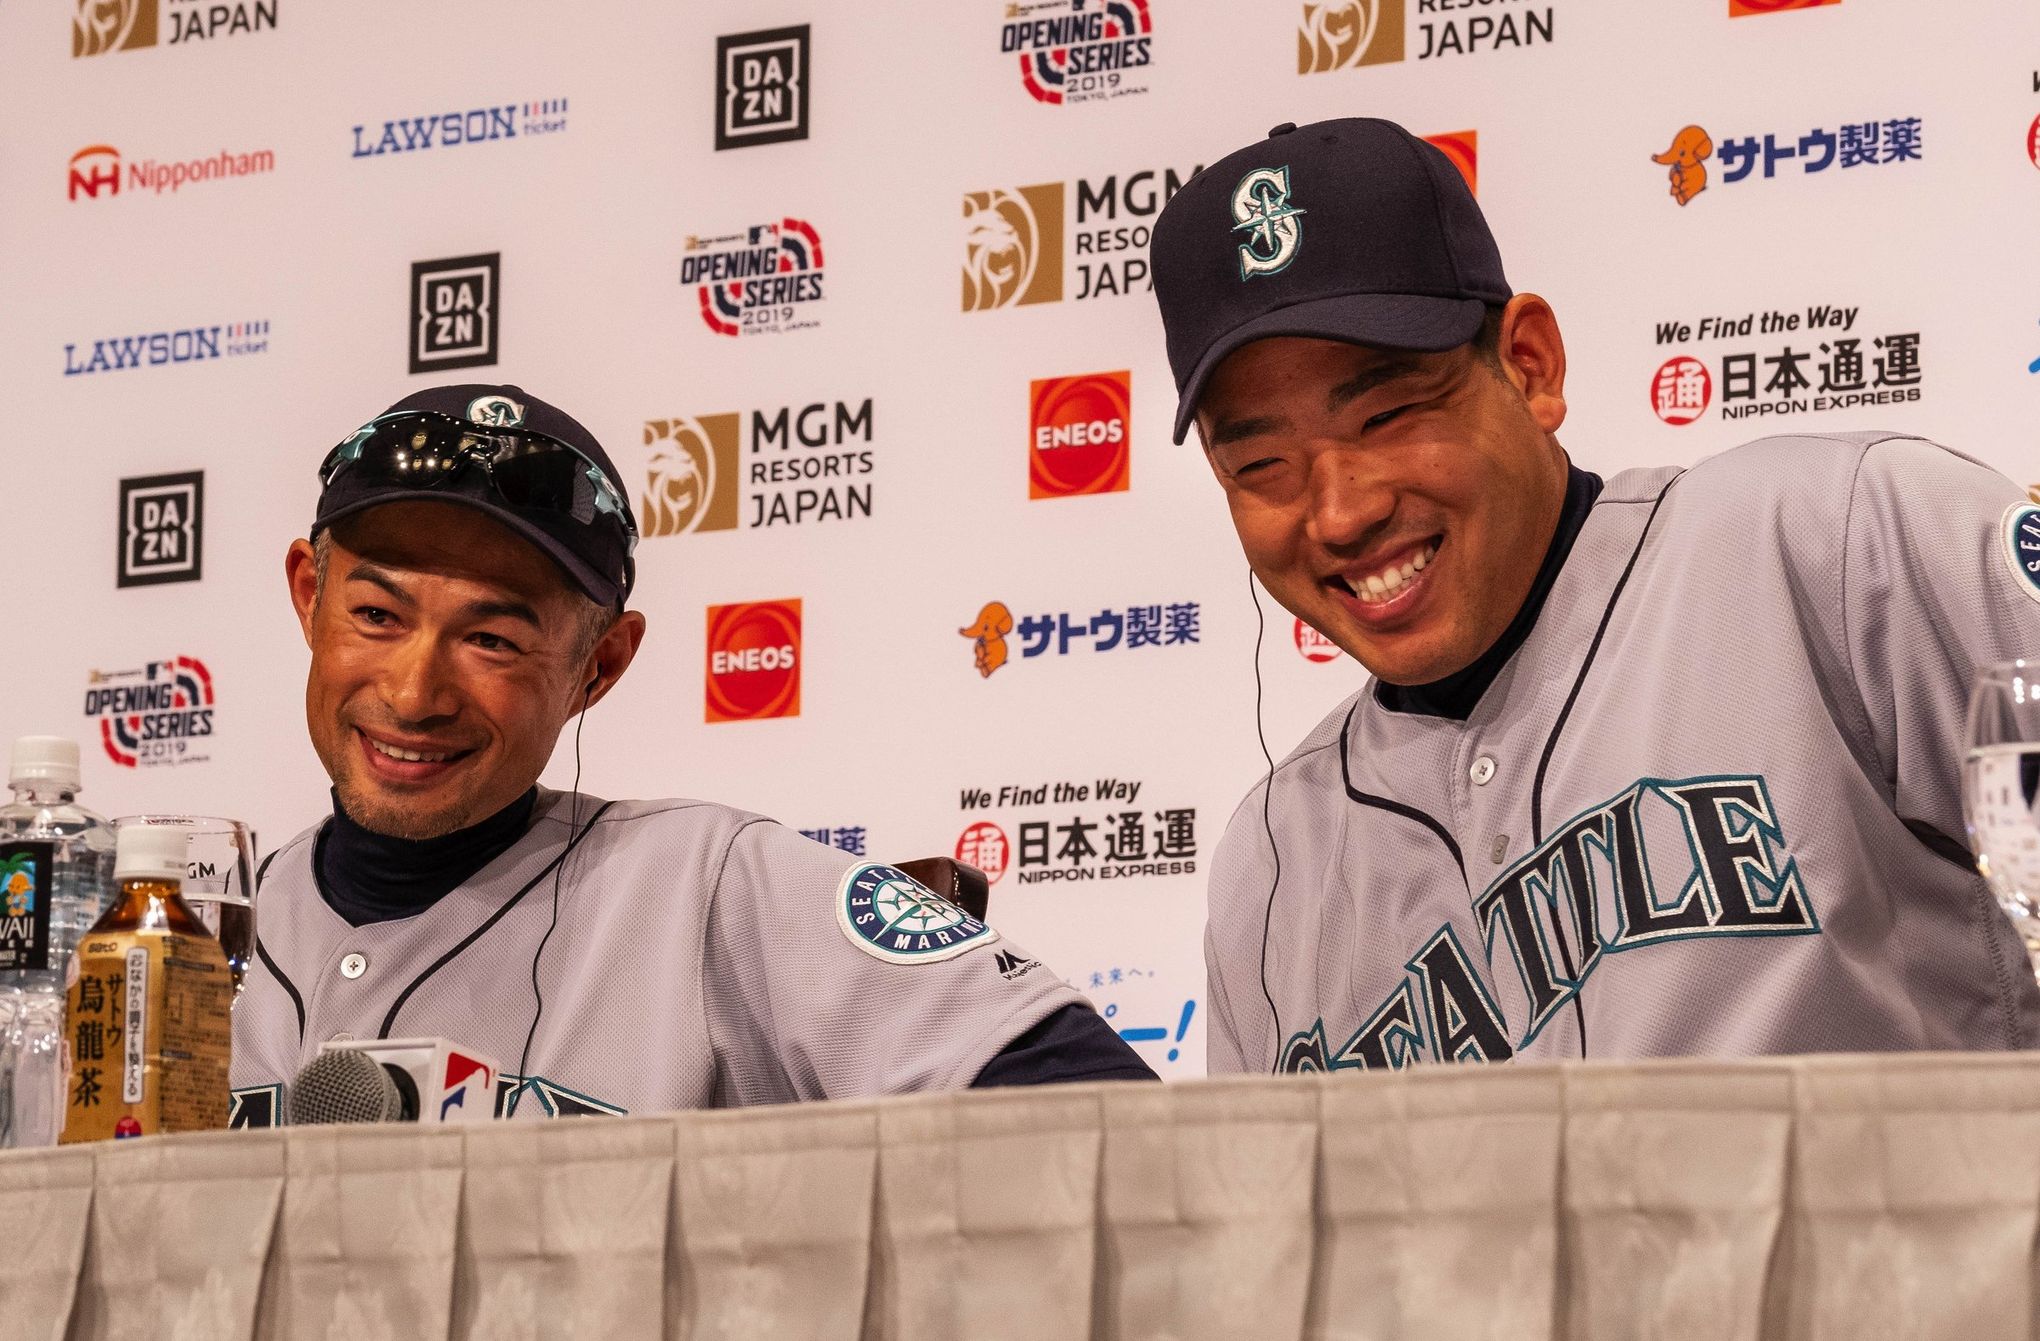 Ichiro and Yusei Kikuchi face massive media frenzy in first